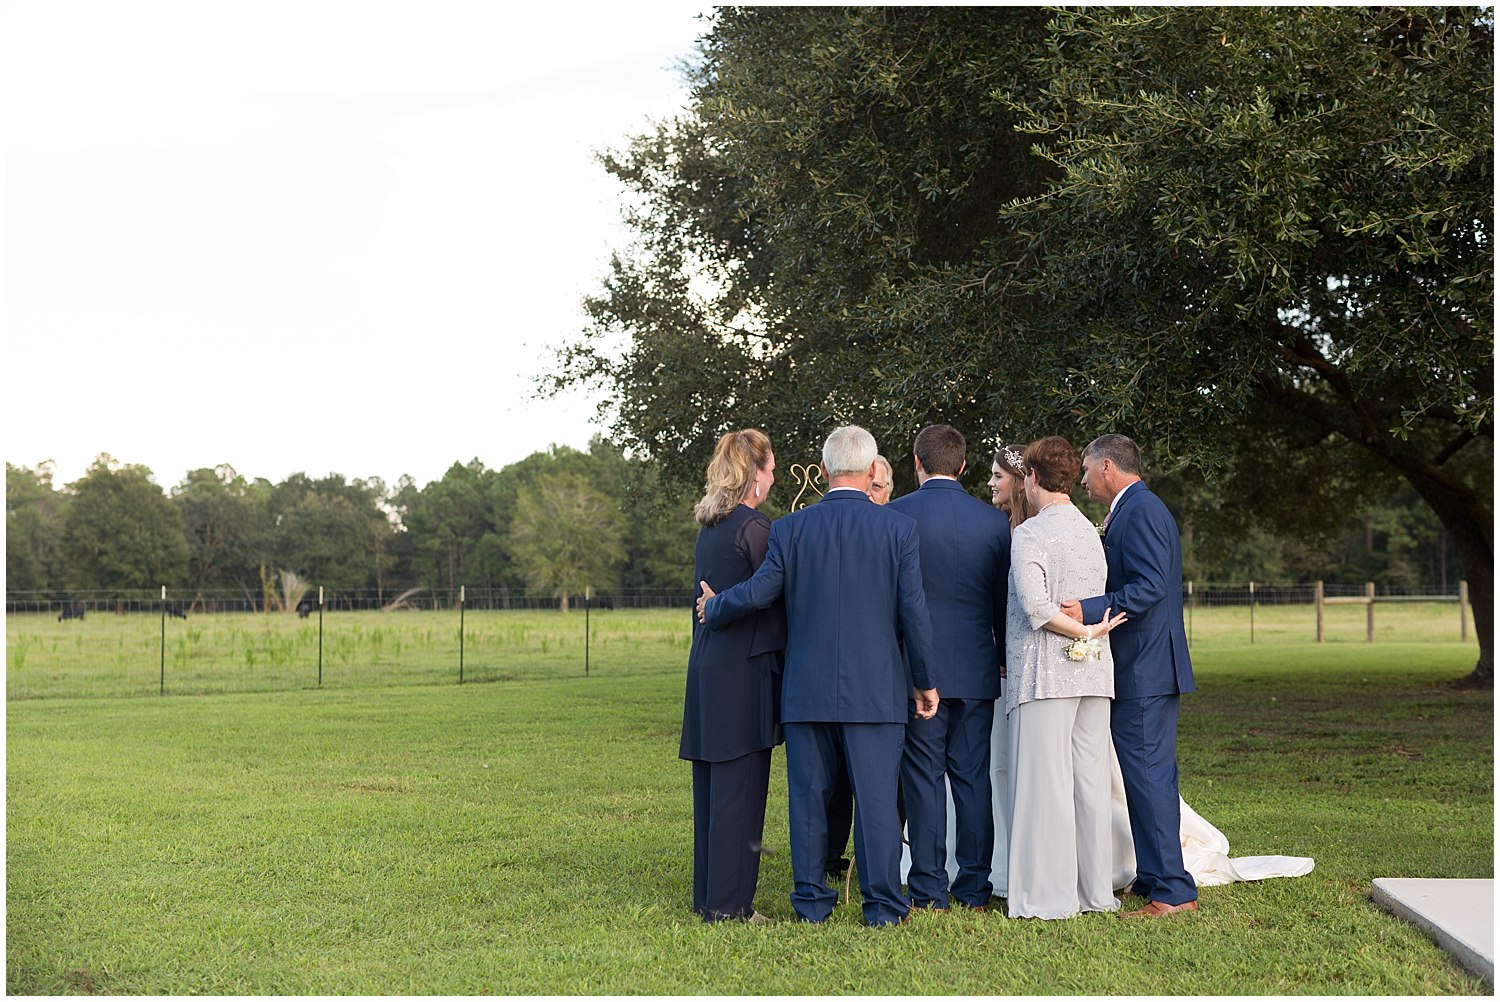 family praying at wedding ceremony